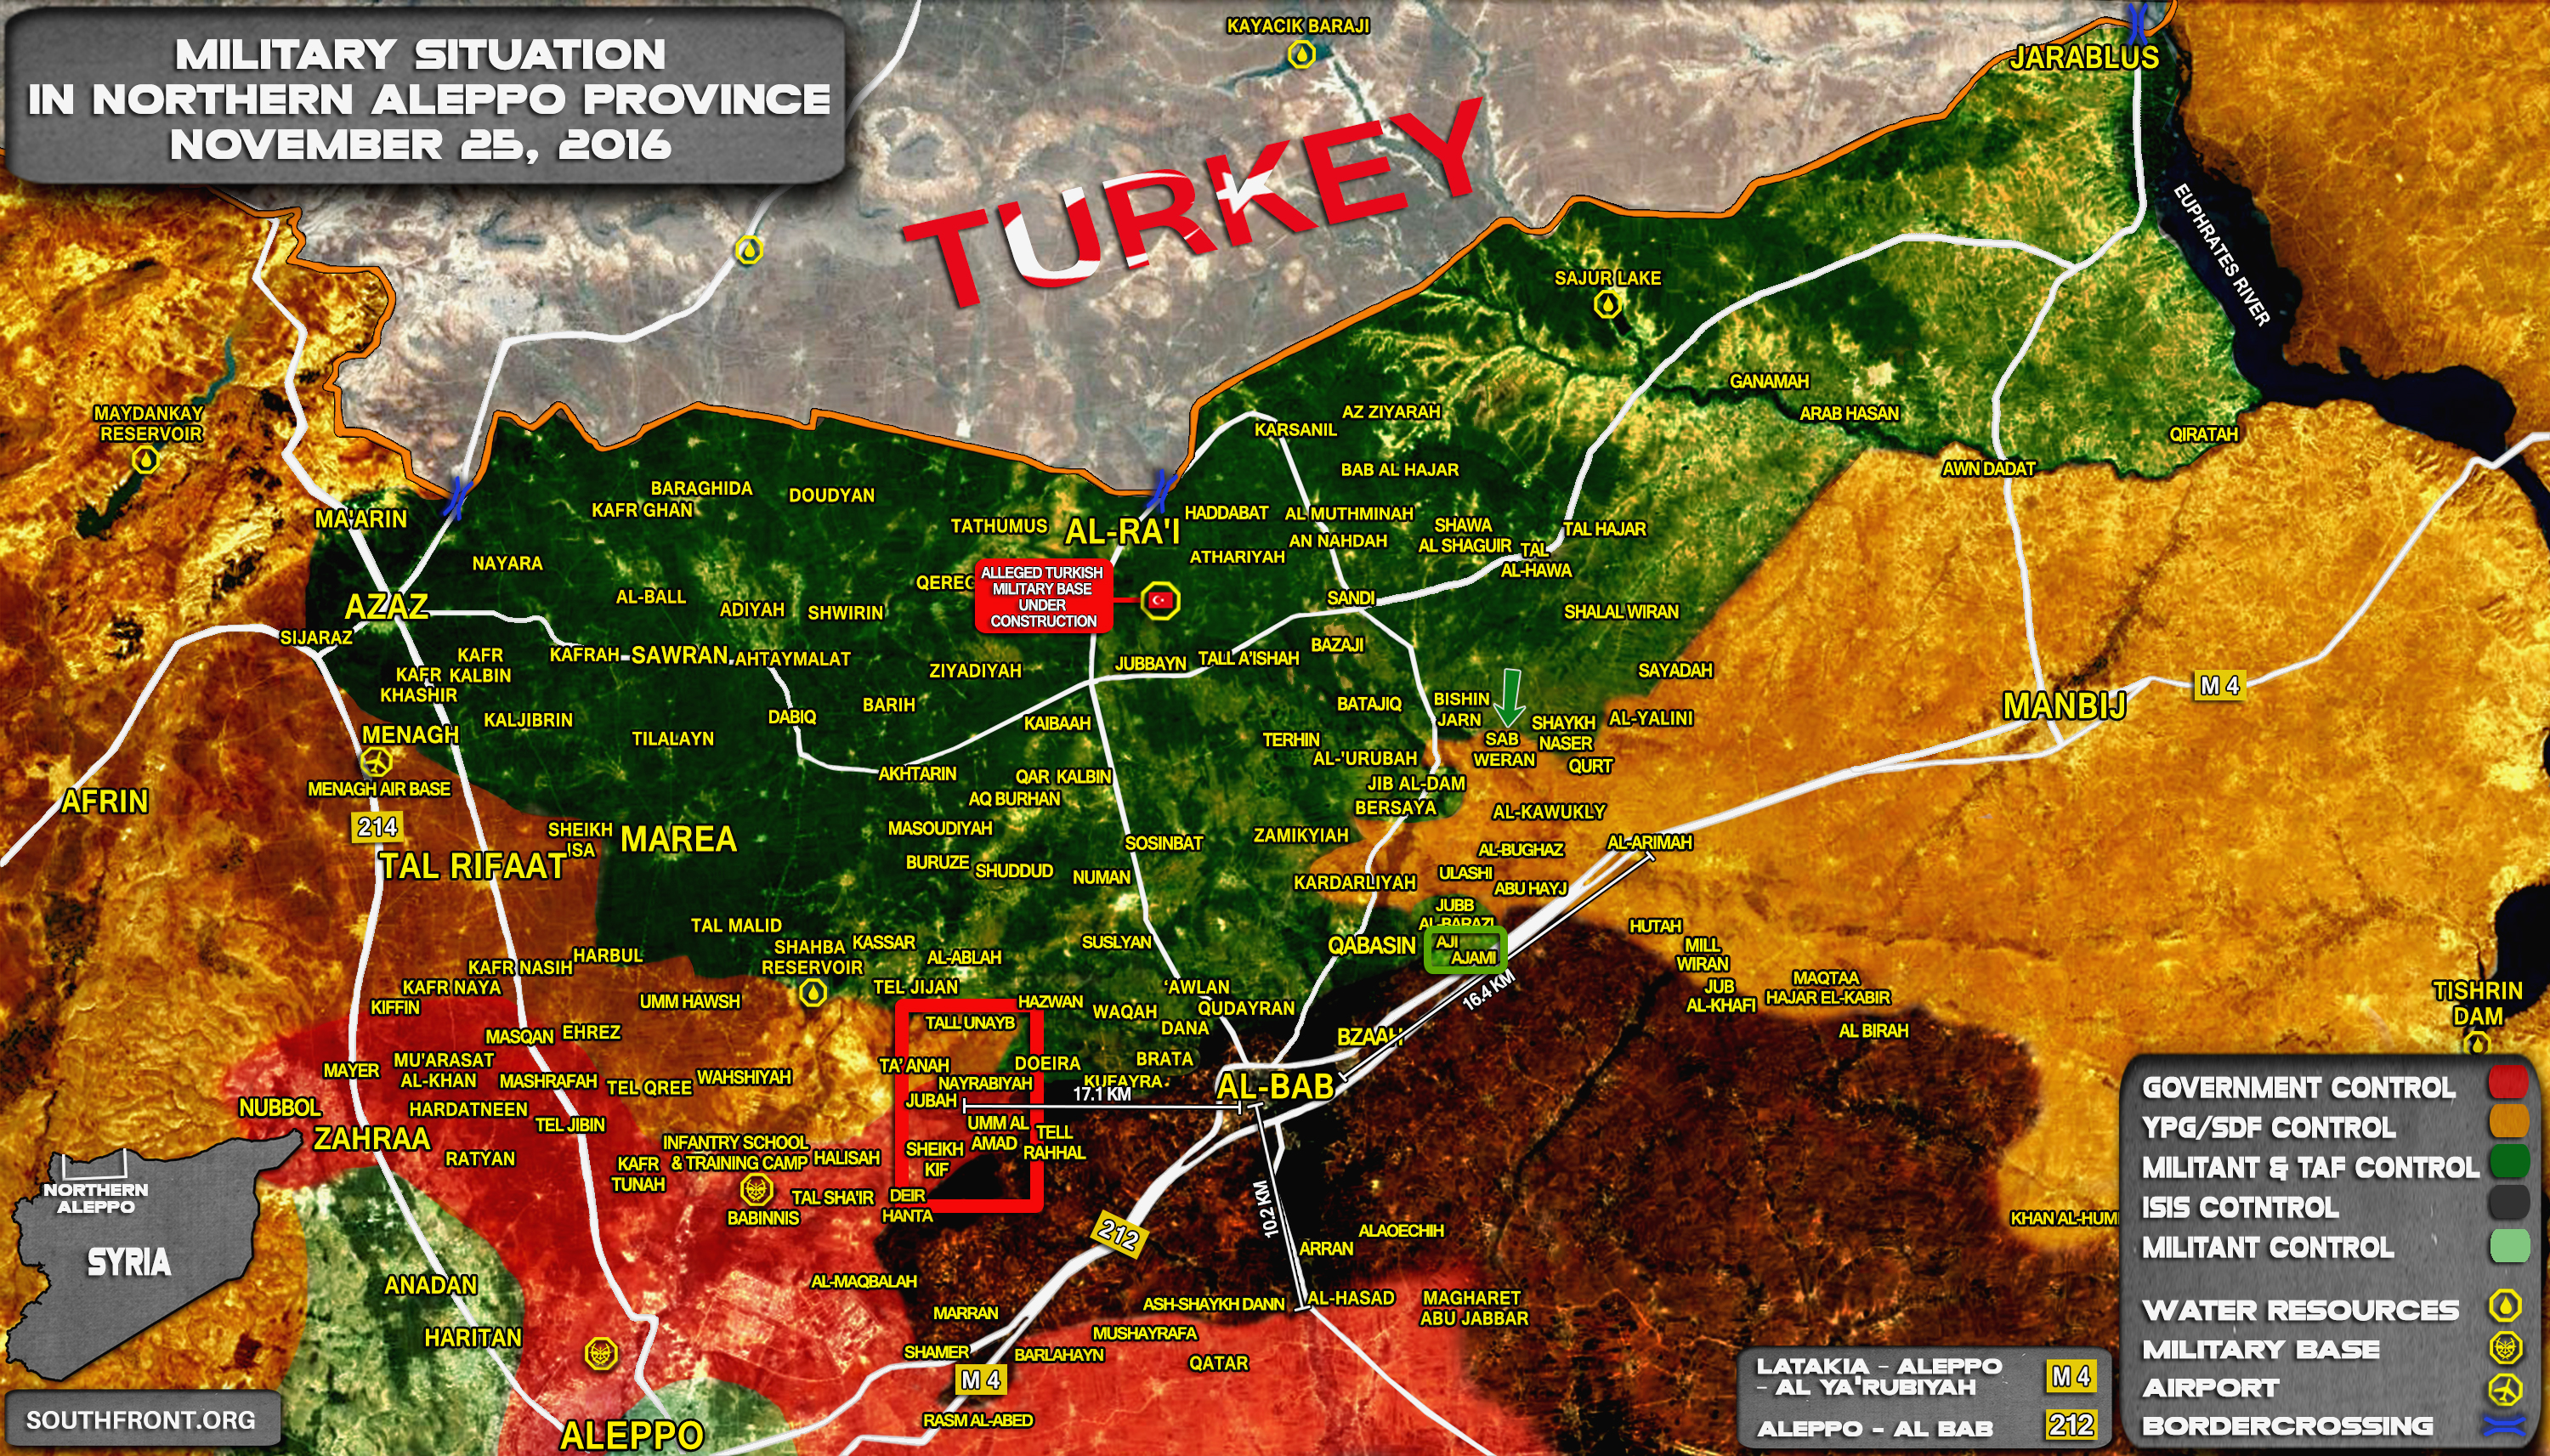 Turkey-led Forces Advance against Kurdish YPG, Seize 2 Villages in Aleppo Province